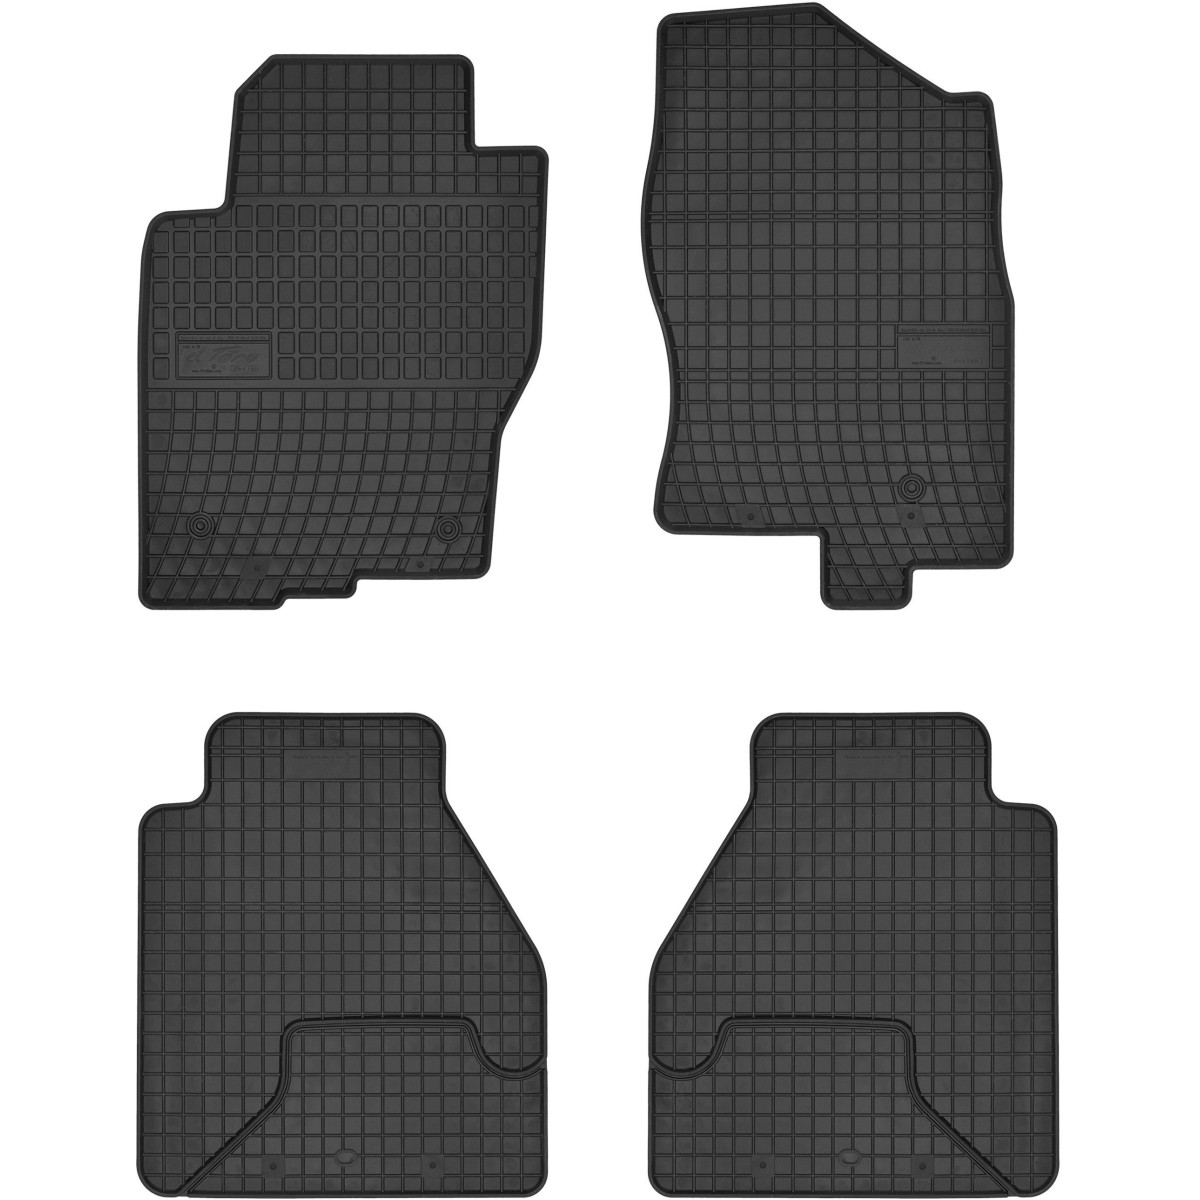 Guminiai kilimėliai Frogum Nissan Pathfinder 2010-2014m. / facelift